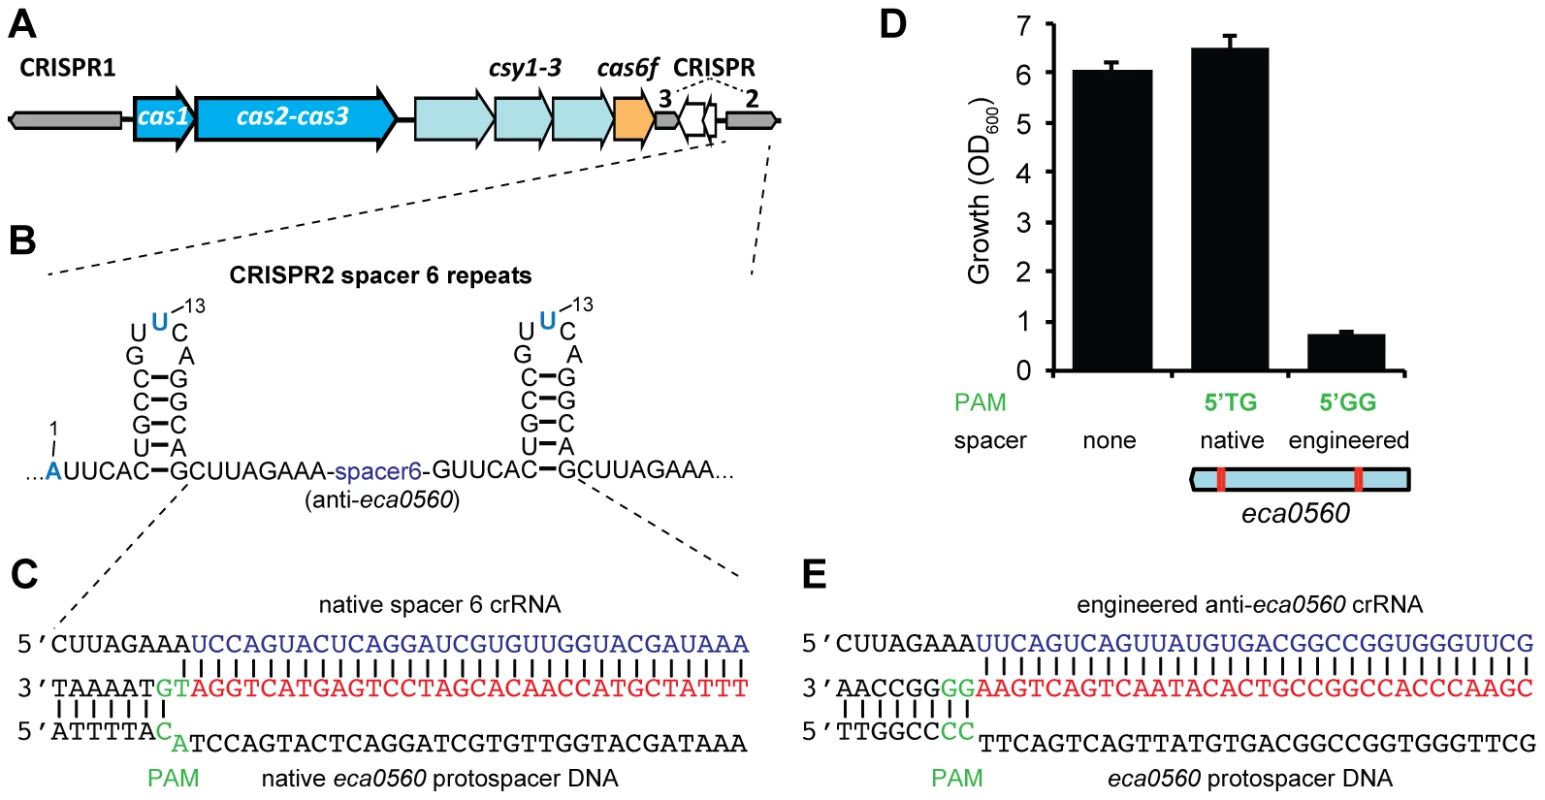 A single nucleotide PAM mutation enables escape from native CRISPR/Cas targeting.